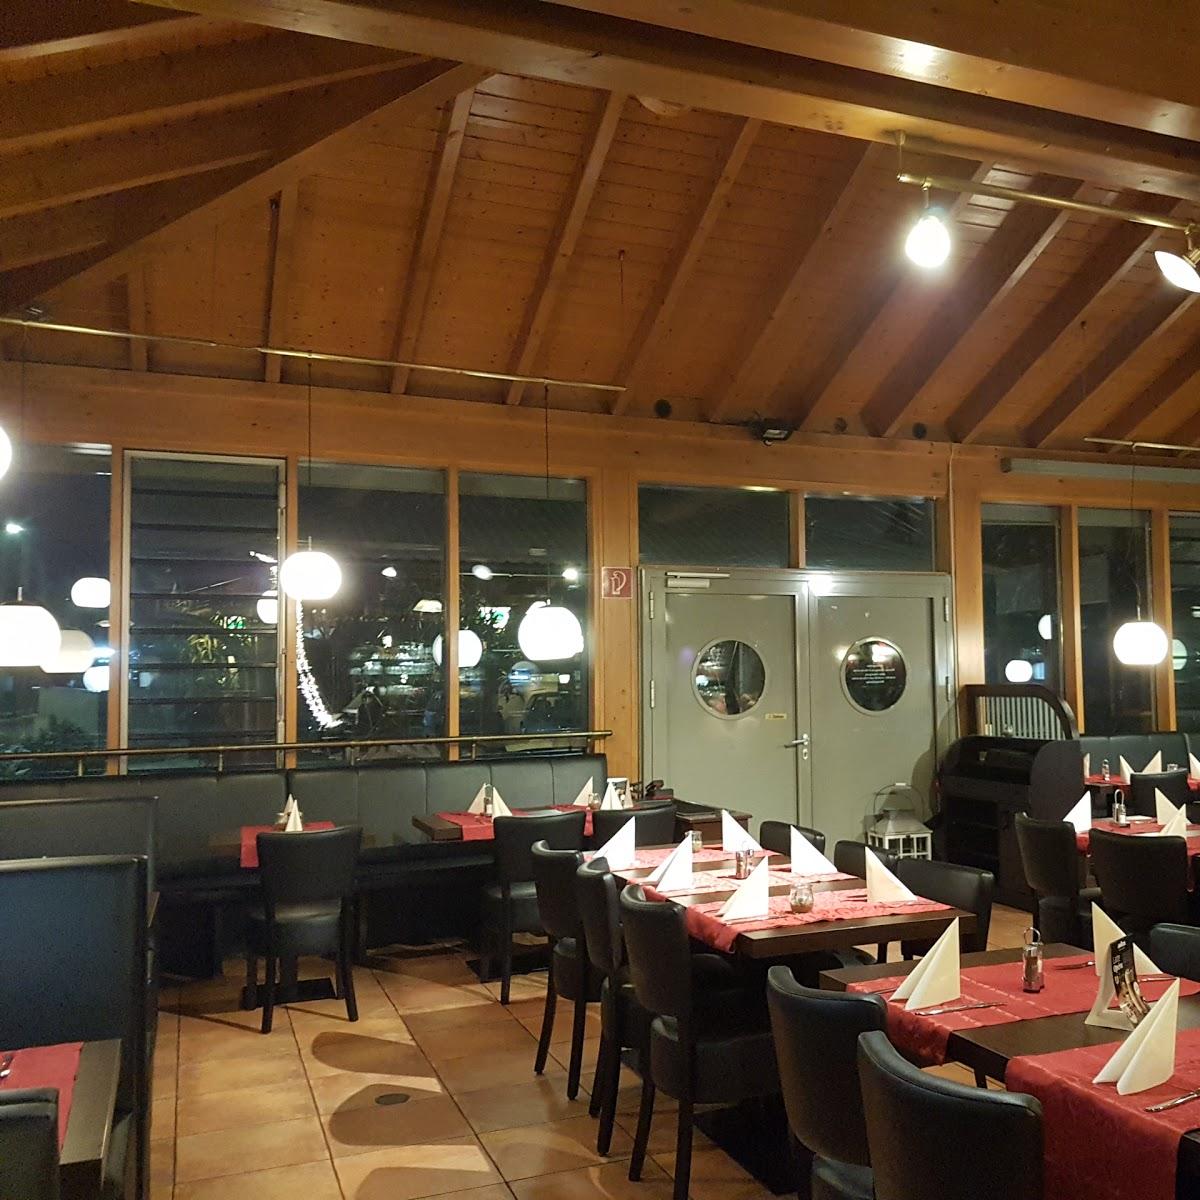 Restaurant "Ristorante Vino Rosso" in Philippsburg